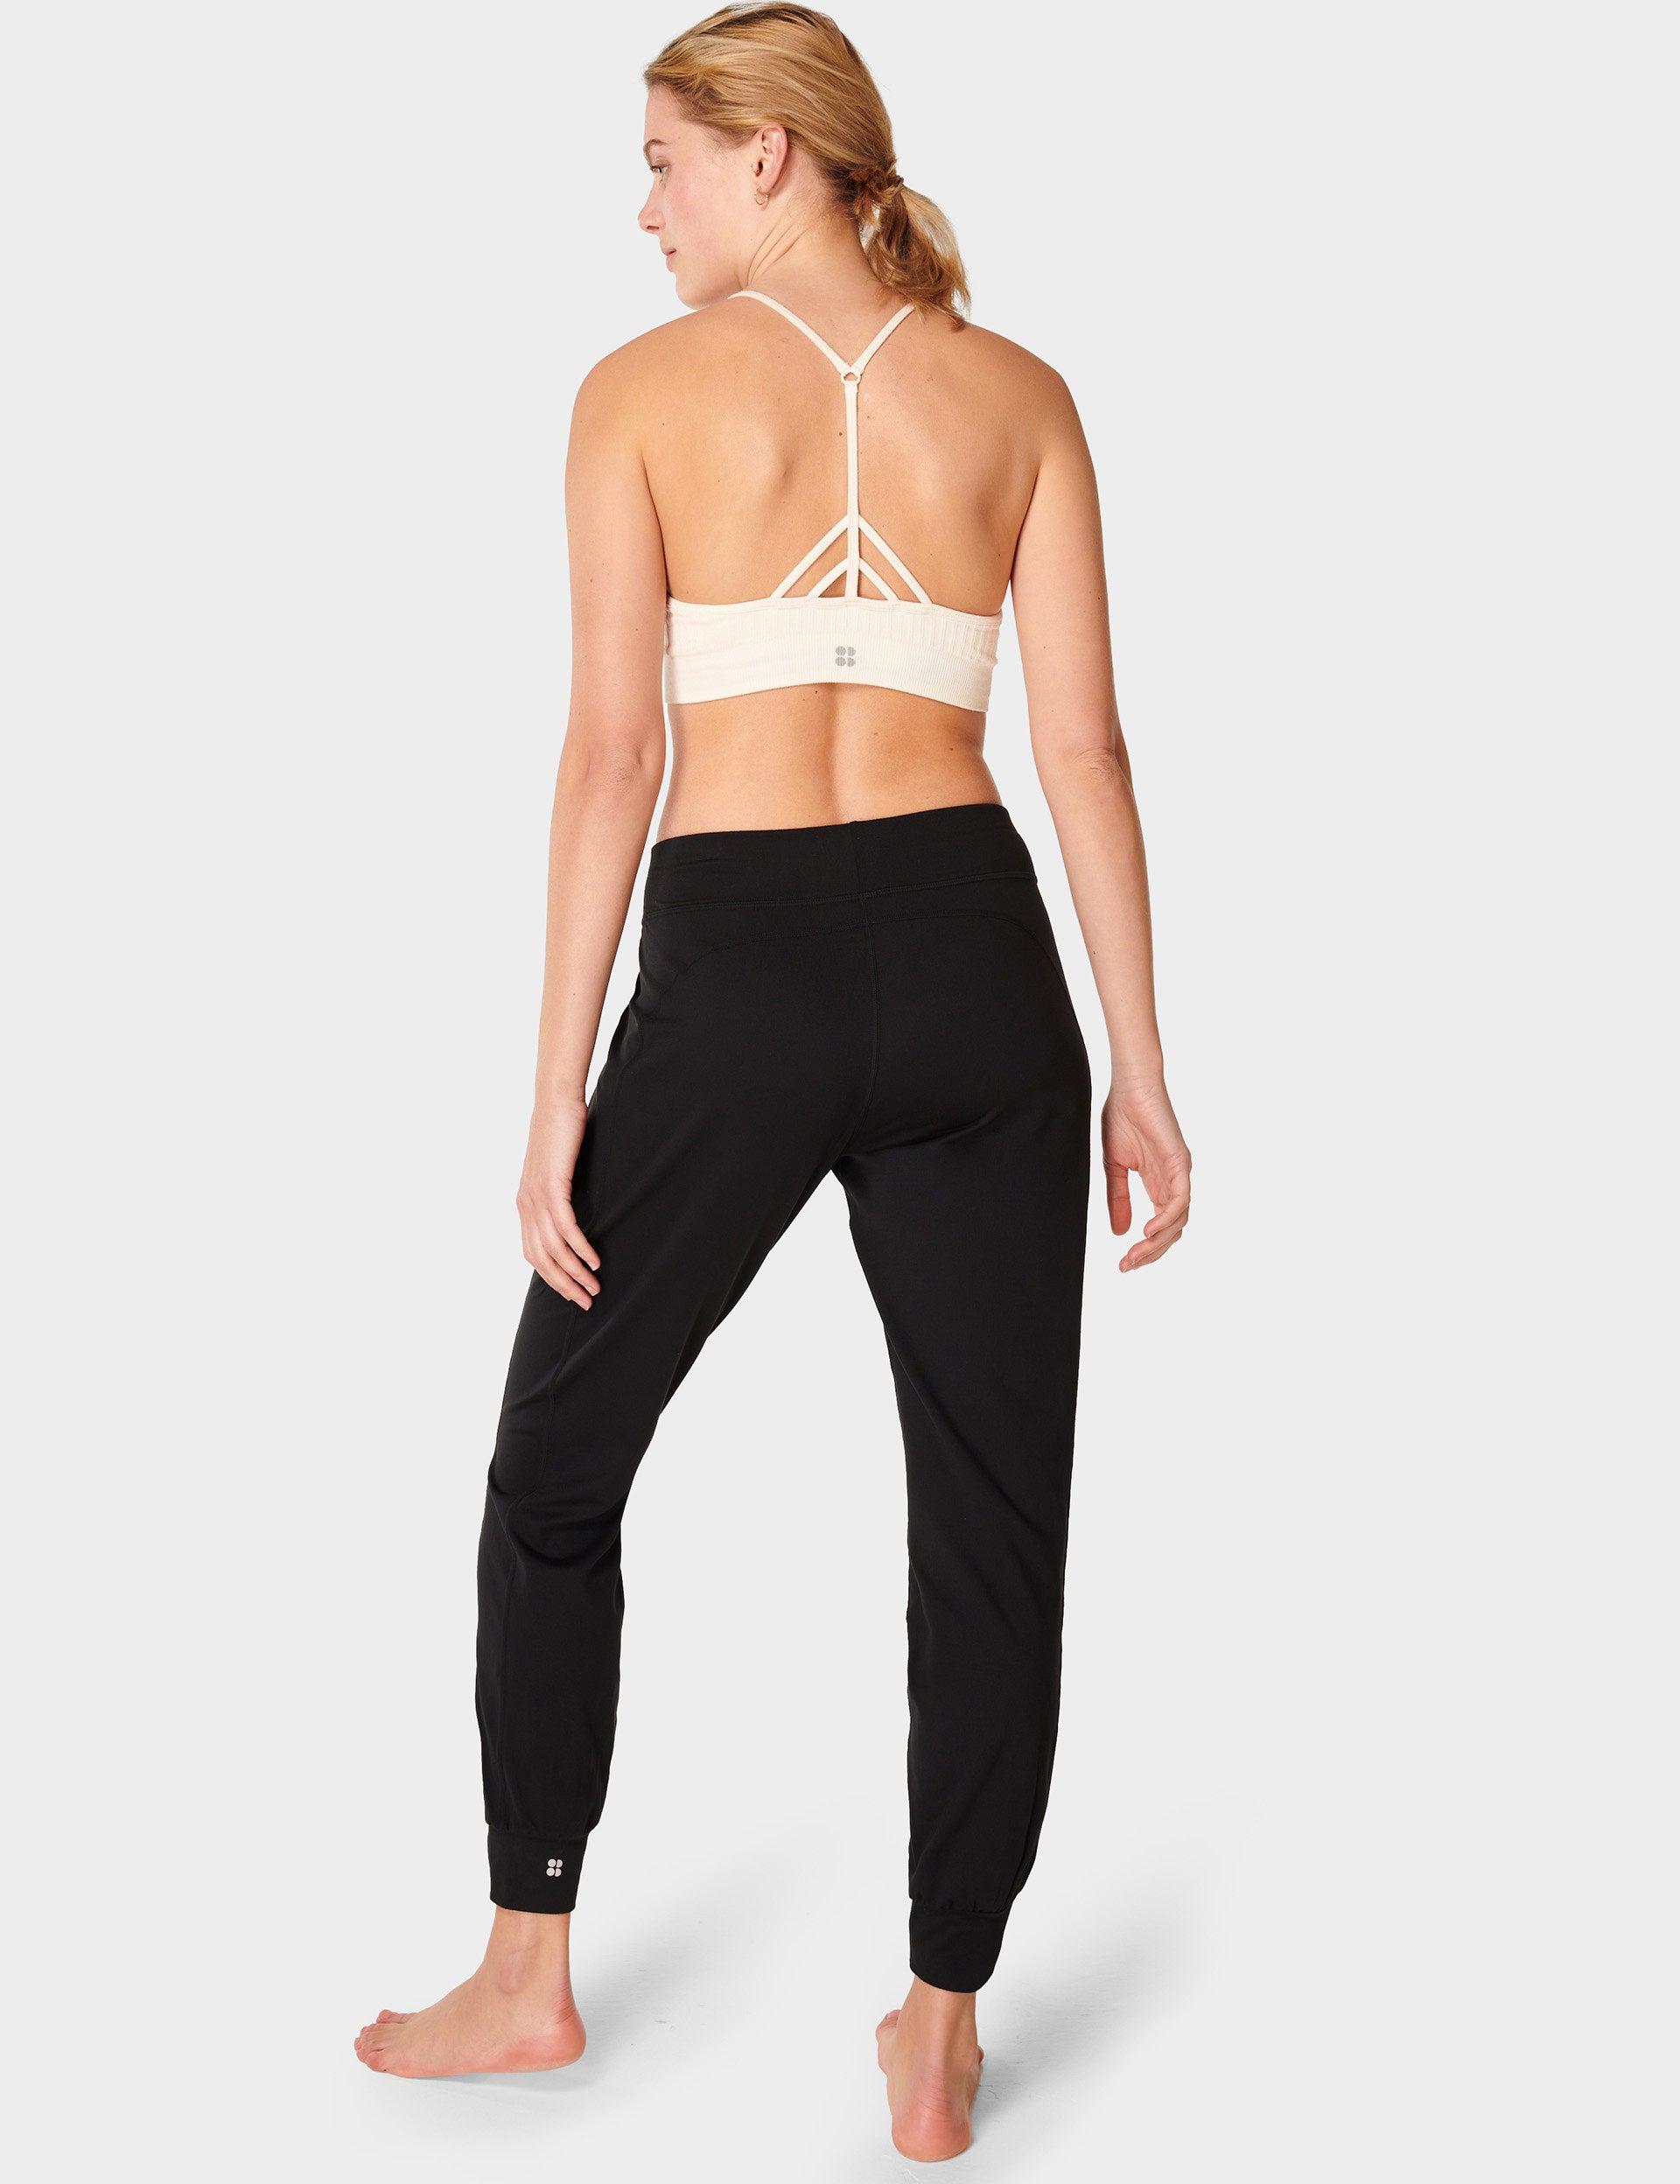 Sweaty Betty Gary 27 Yoga Pants, £90.00